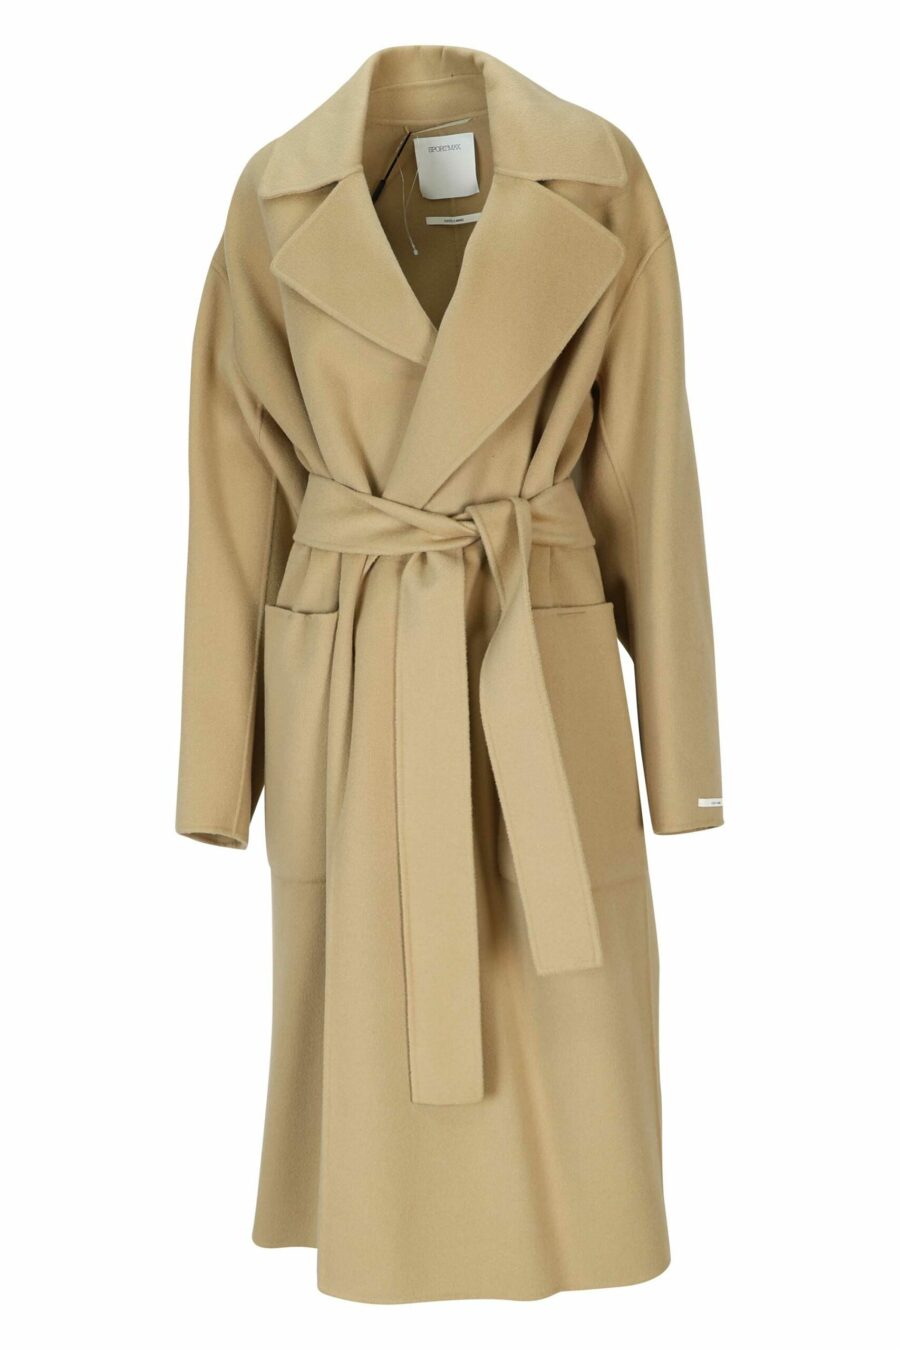 Abrigo beige largo de lana con bolsillos - 20110241060162 scaled